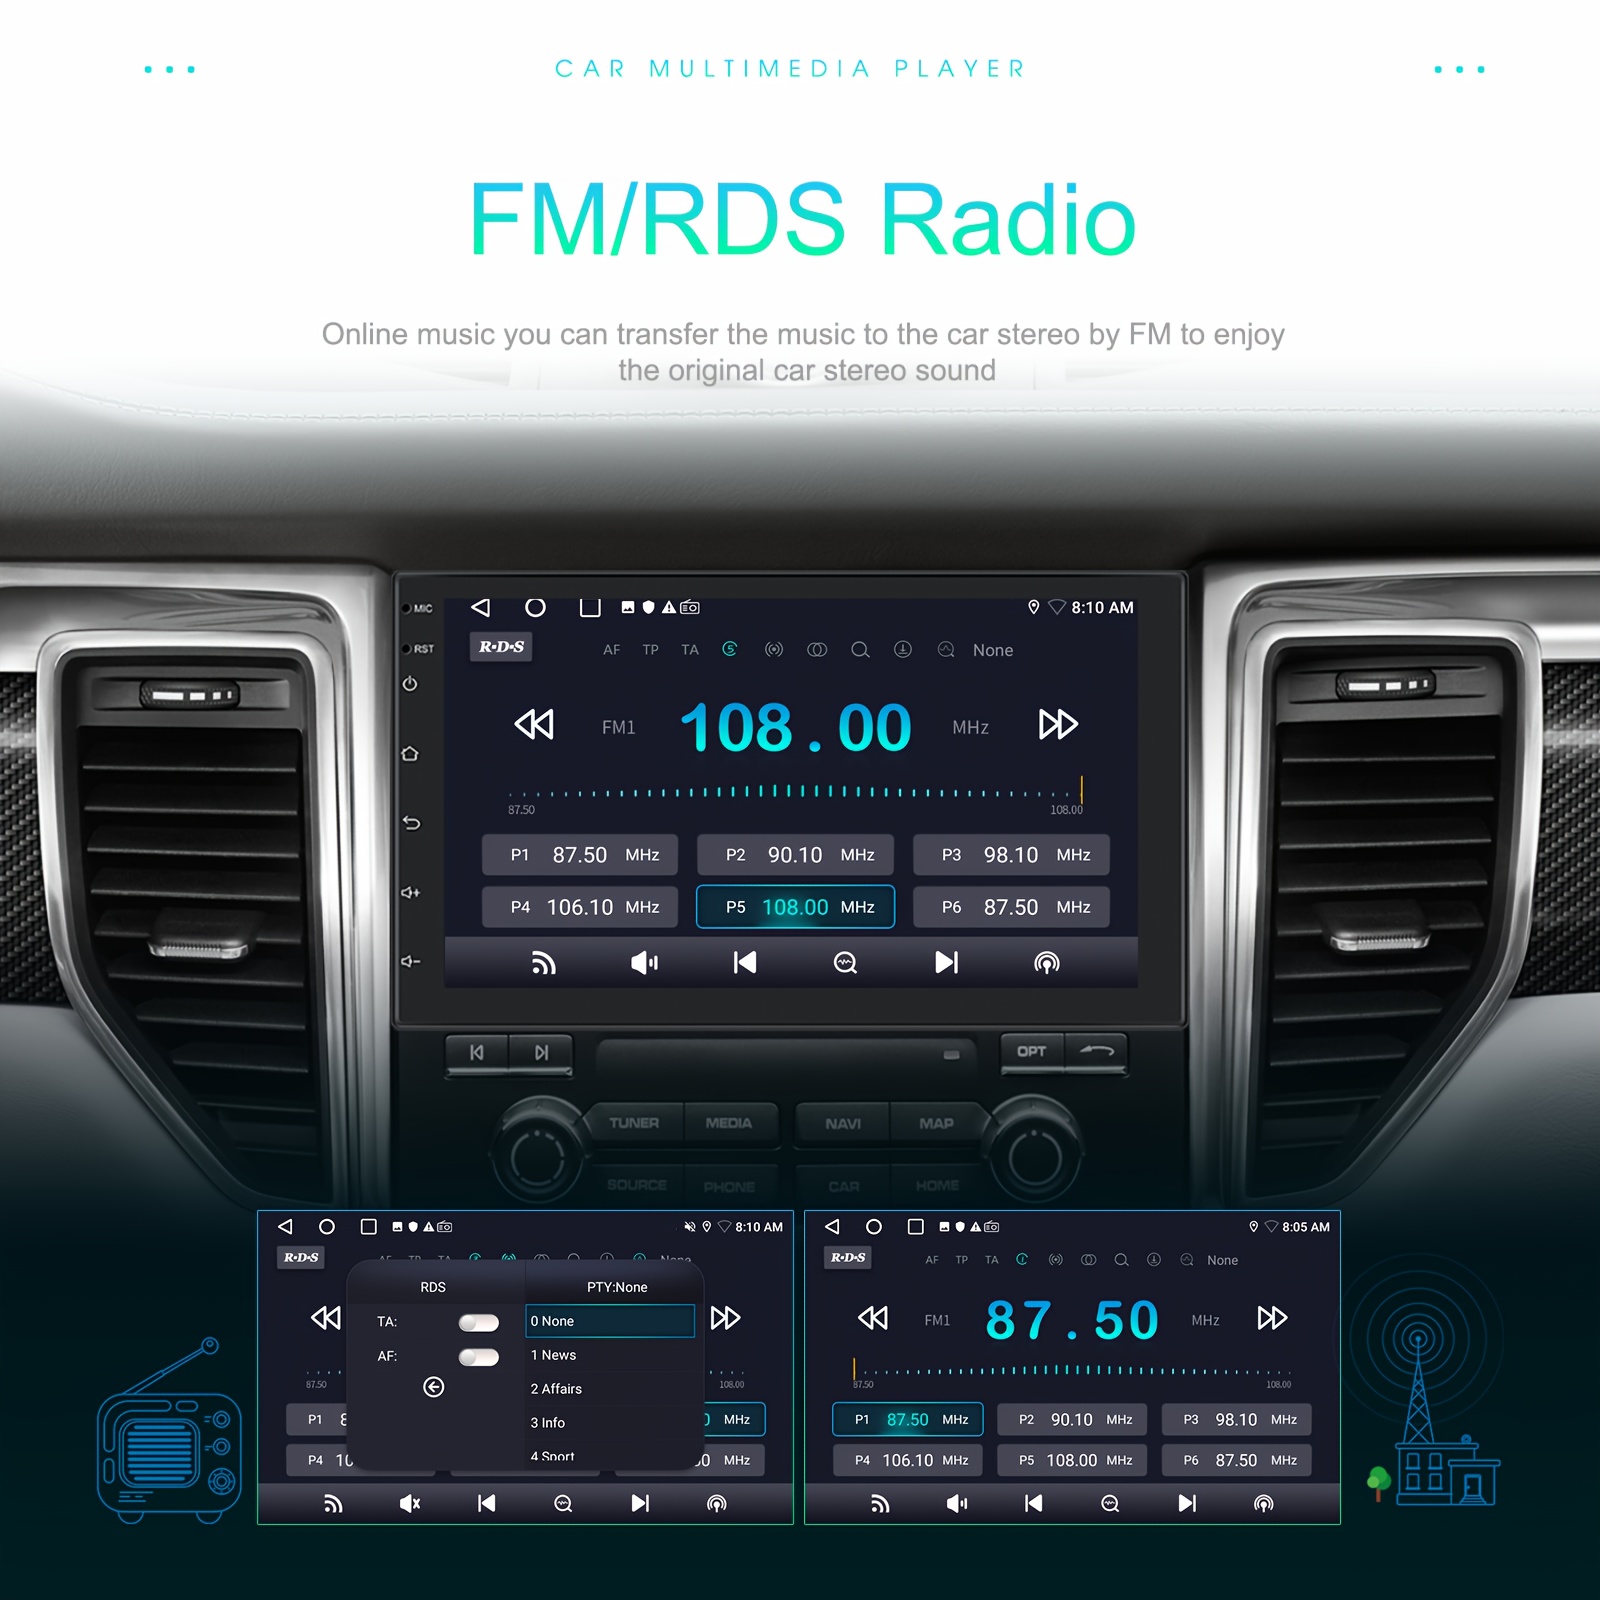 2G+64G Android doble DIN estéreo de coche inalámbrico Apple CarPlay y  Android Auto, 7 pulgadas HD pantalla táctil sistema de audio para coche con